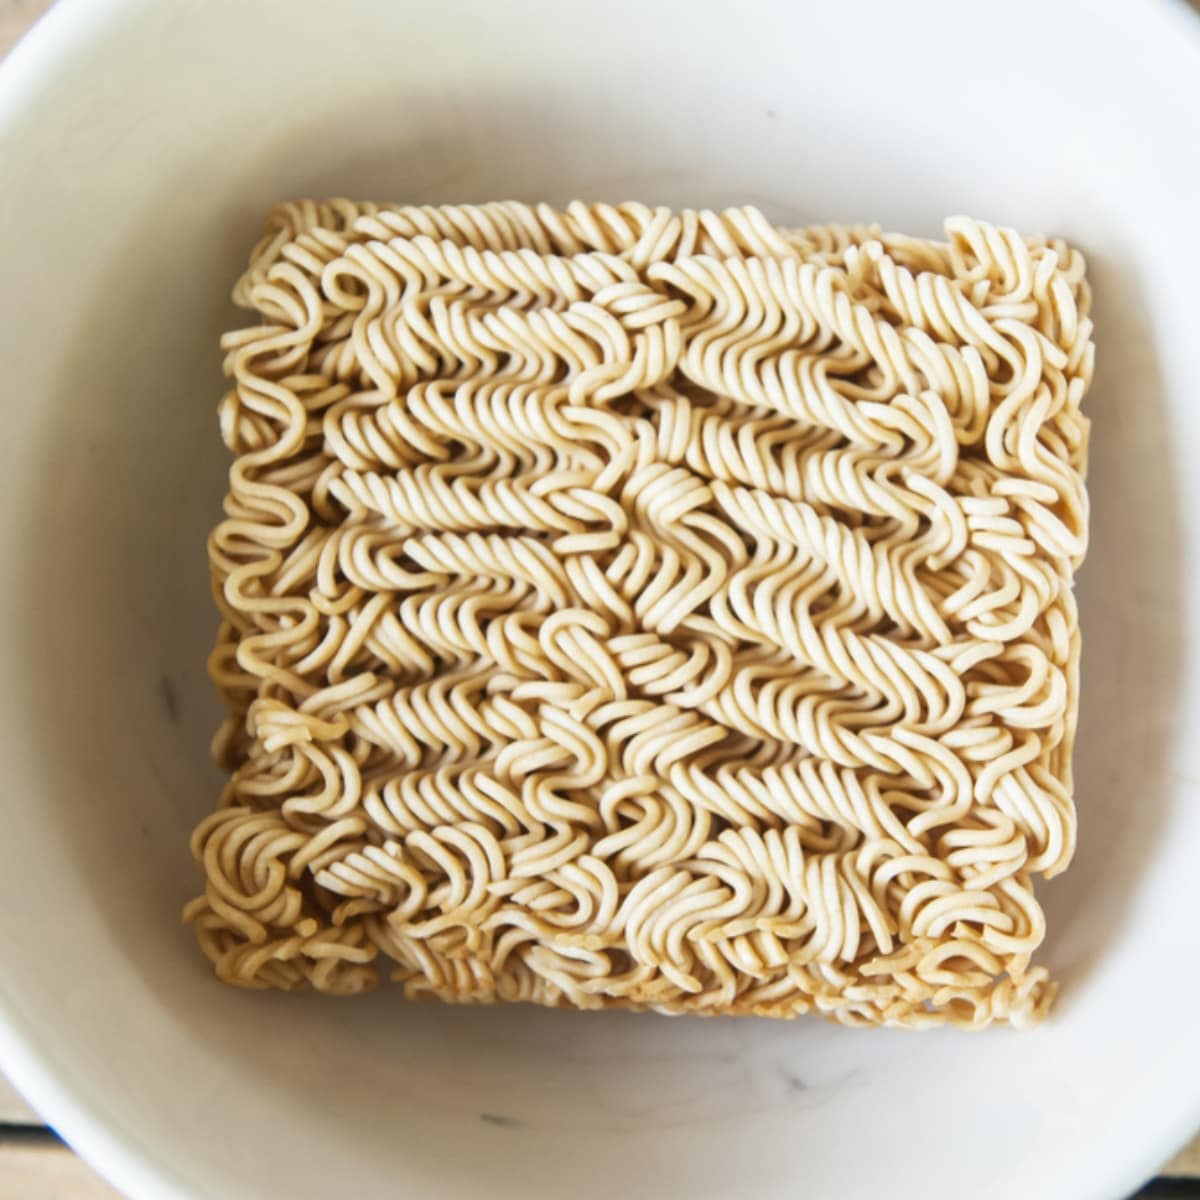 Raw Ramen Noodle Block in a Bowl